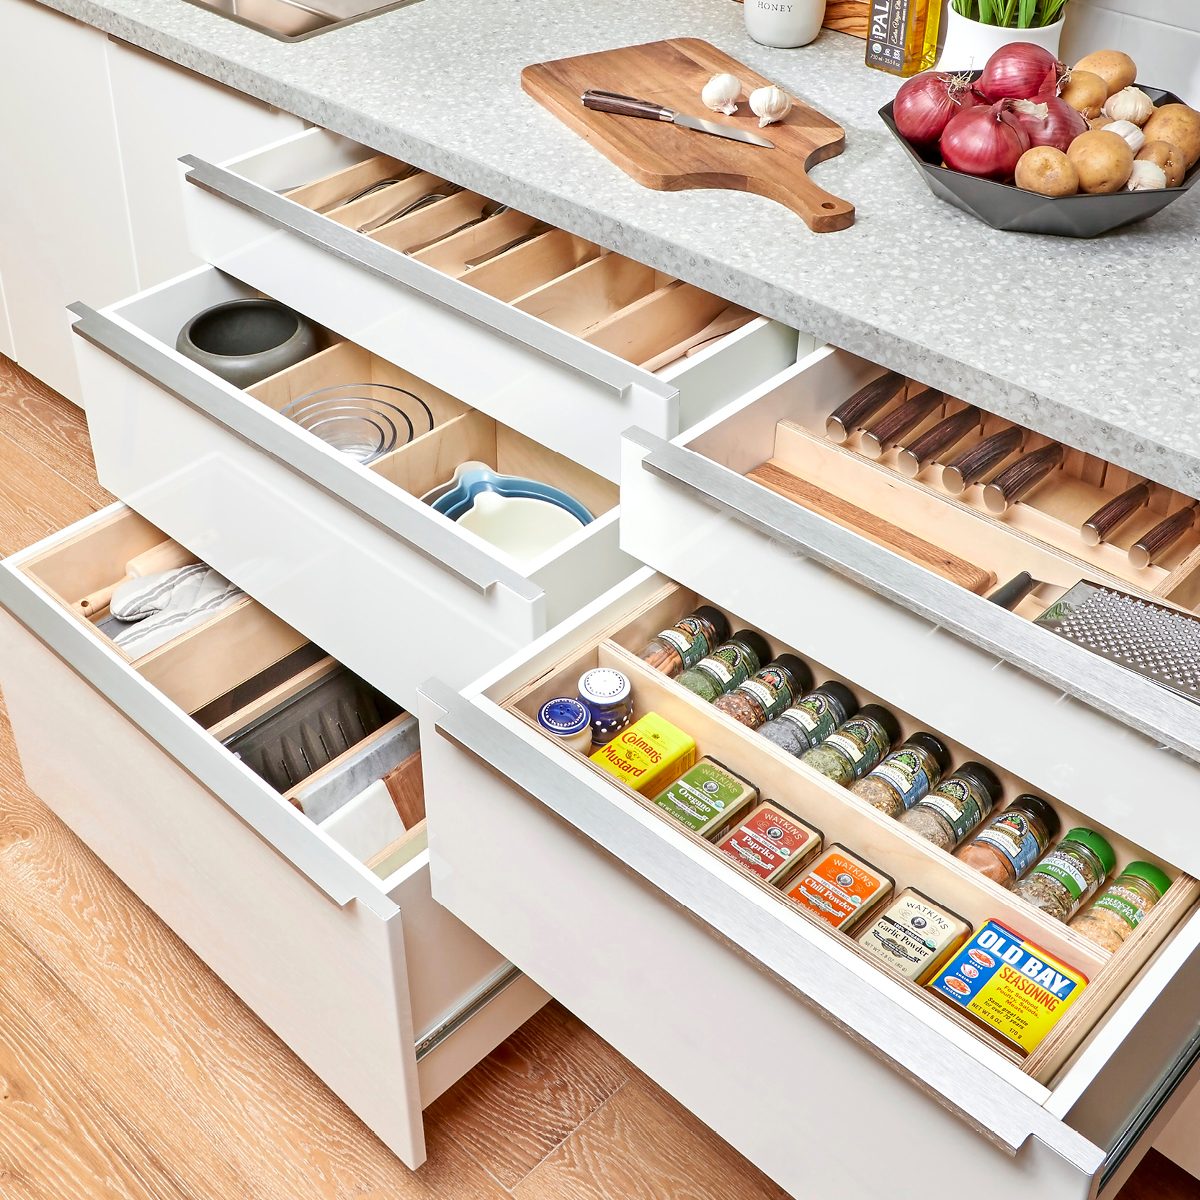 Kitchen drawers provide well-organized storage